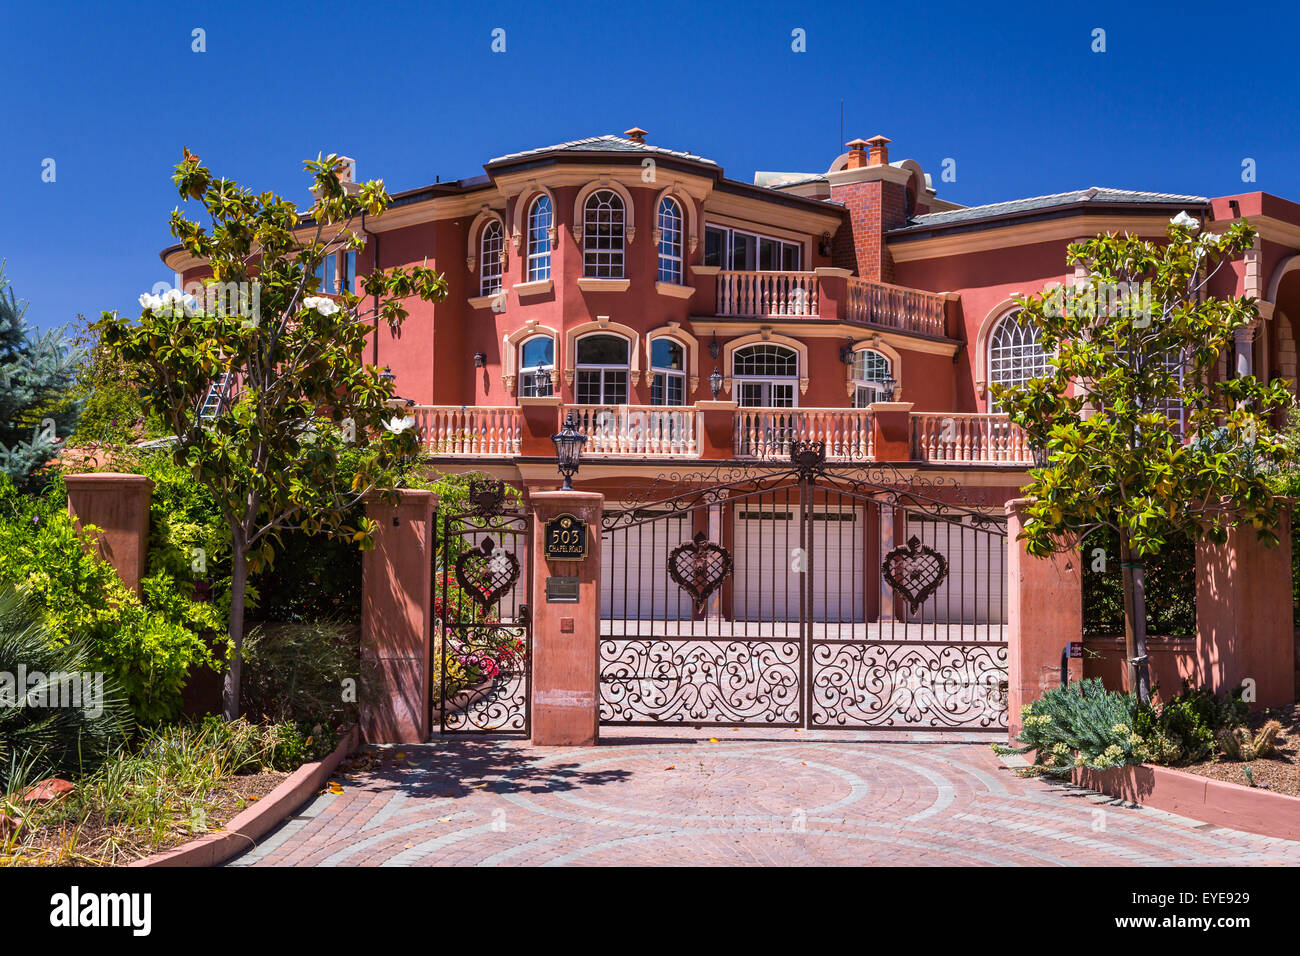 The Comescu House mansion near Sedona, Arizona, USA. Stock Photo